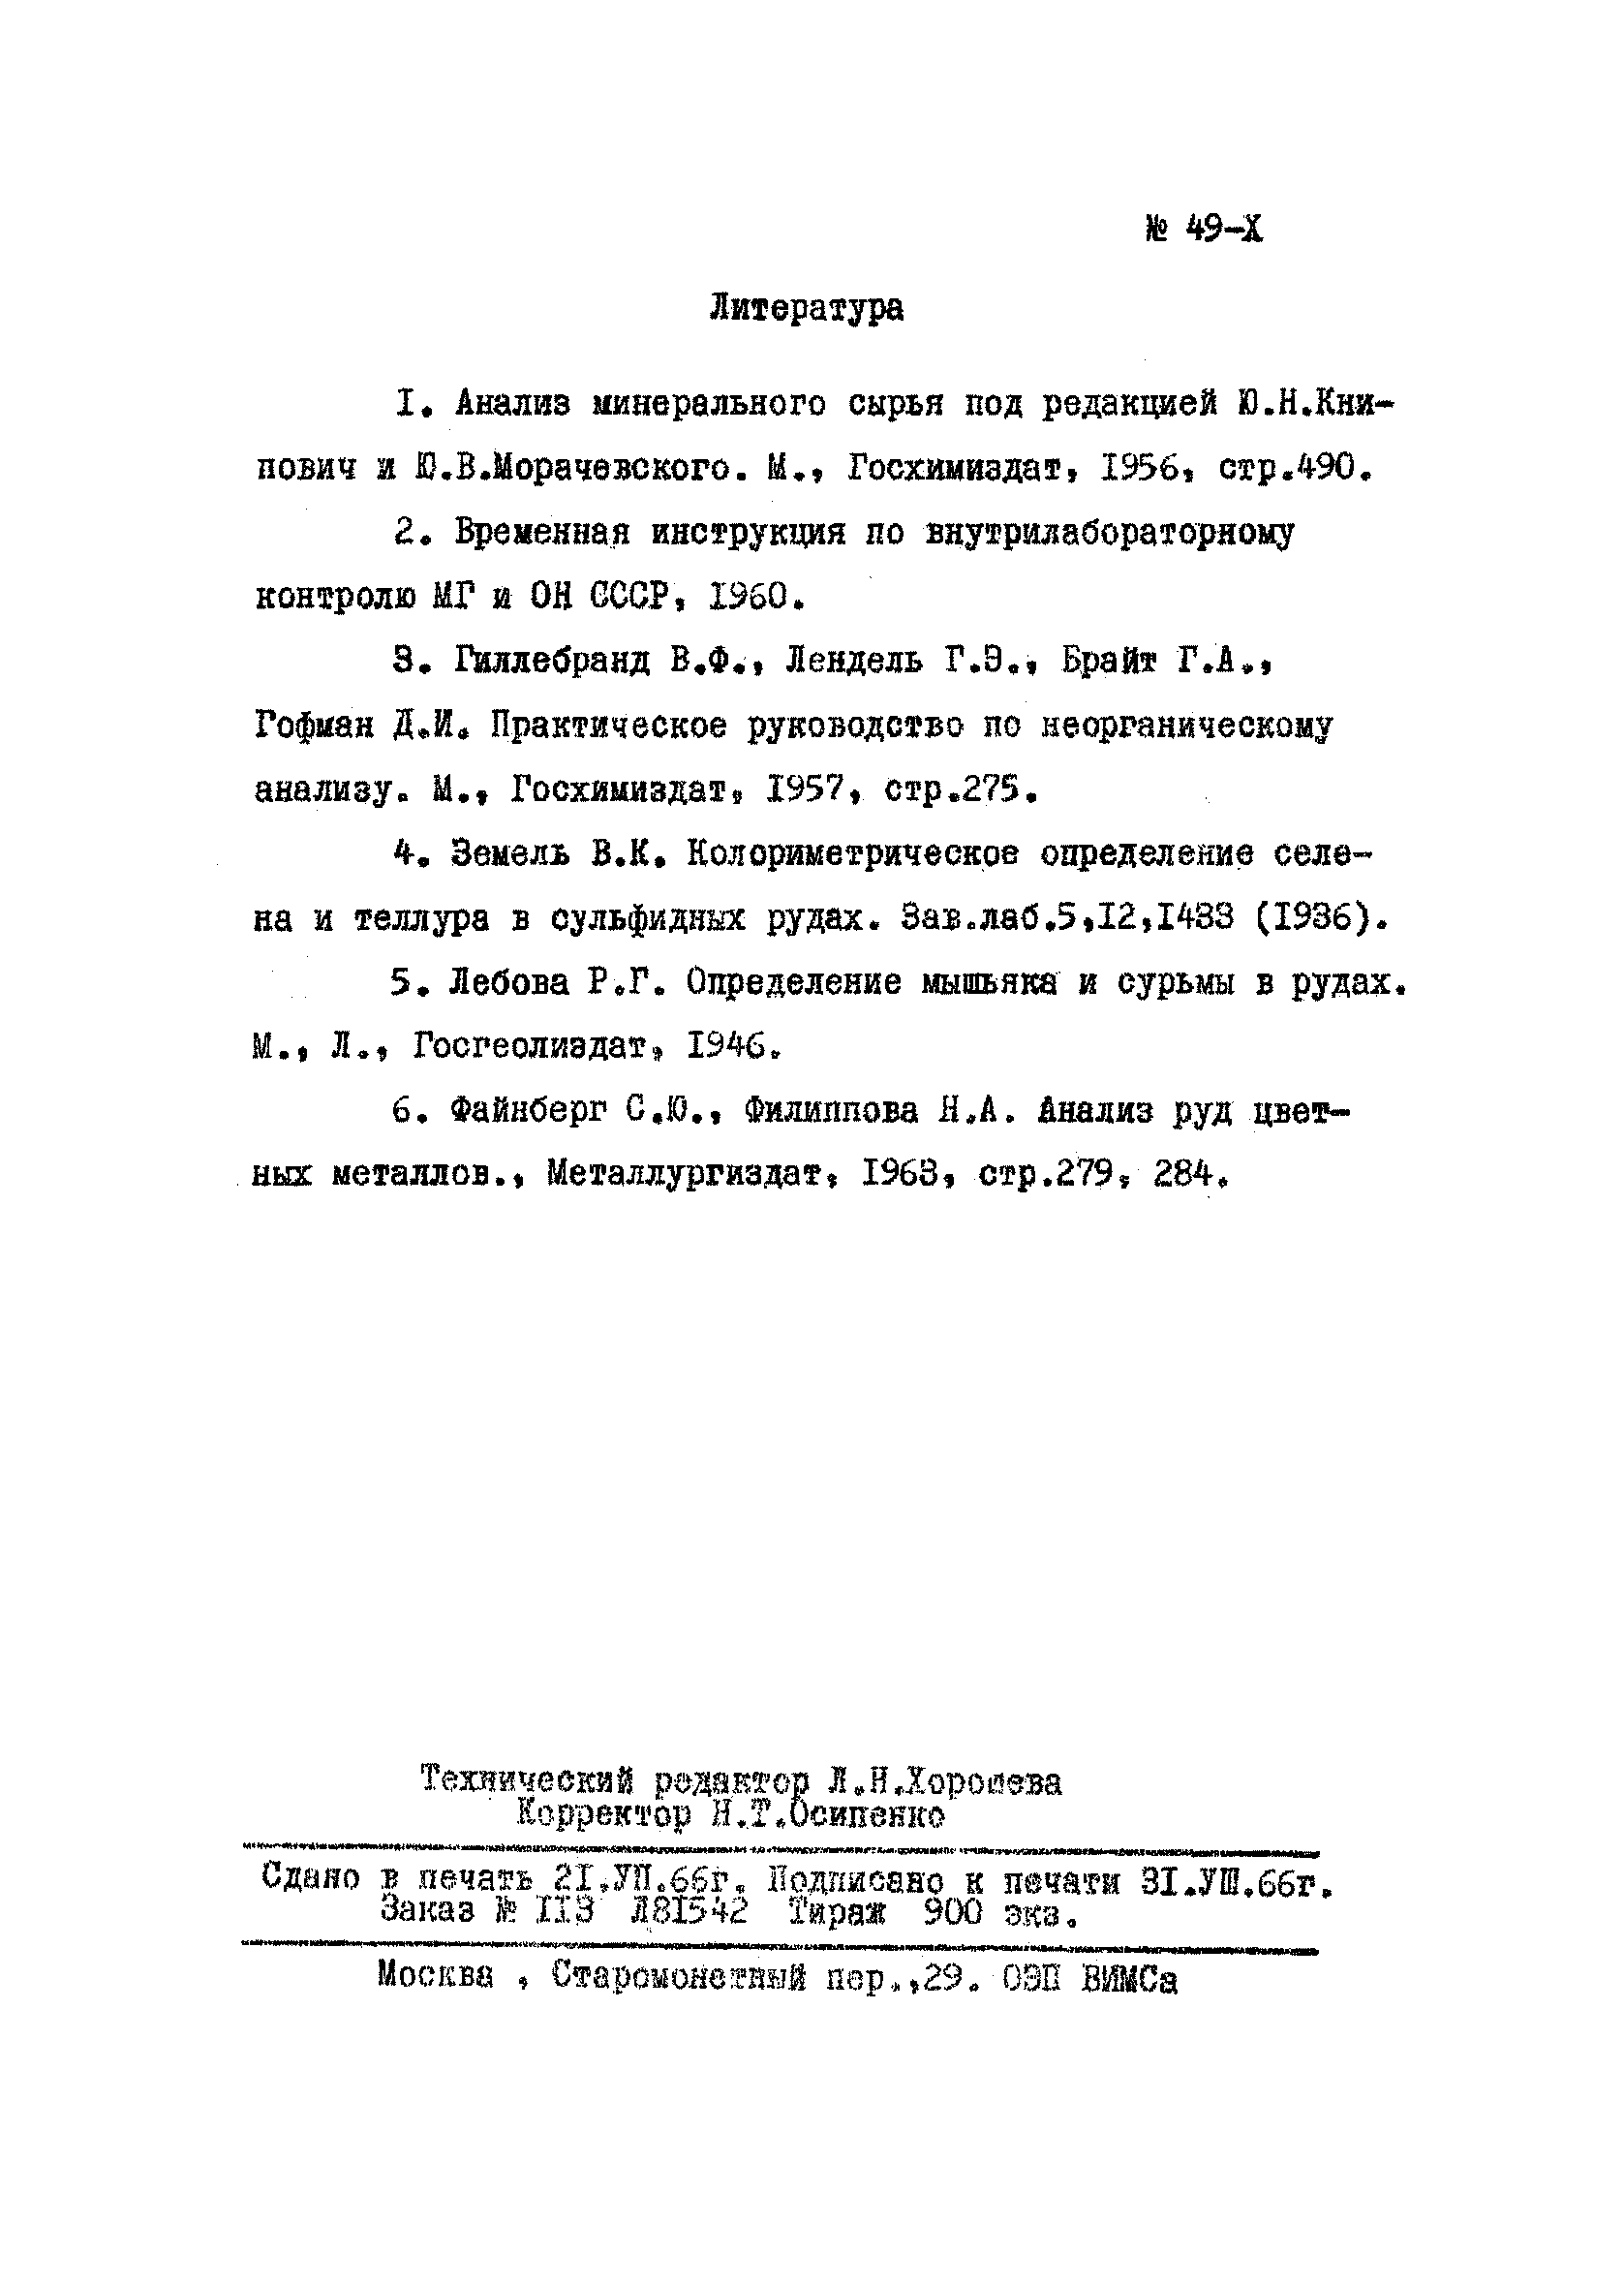 Инструкция НСАМ 49-Х